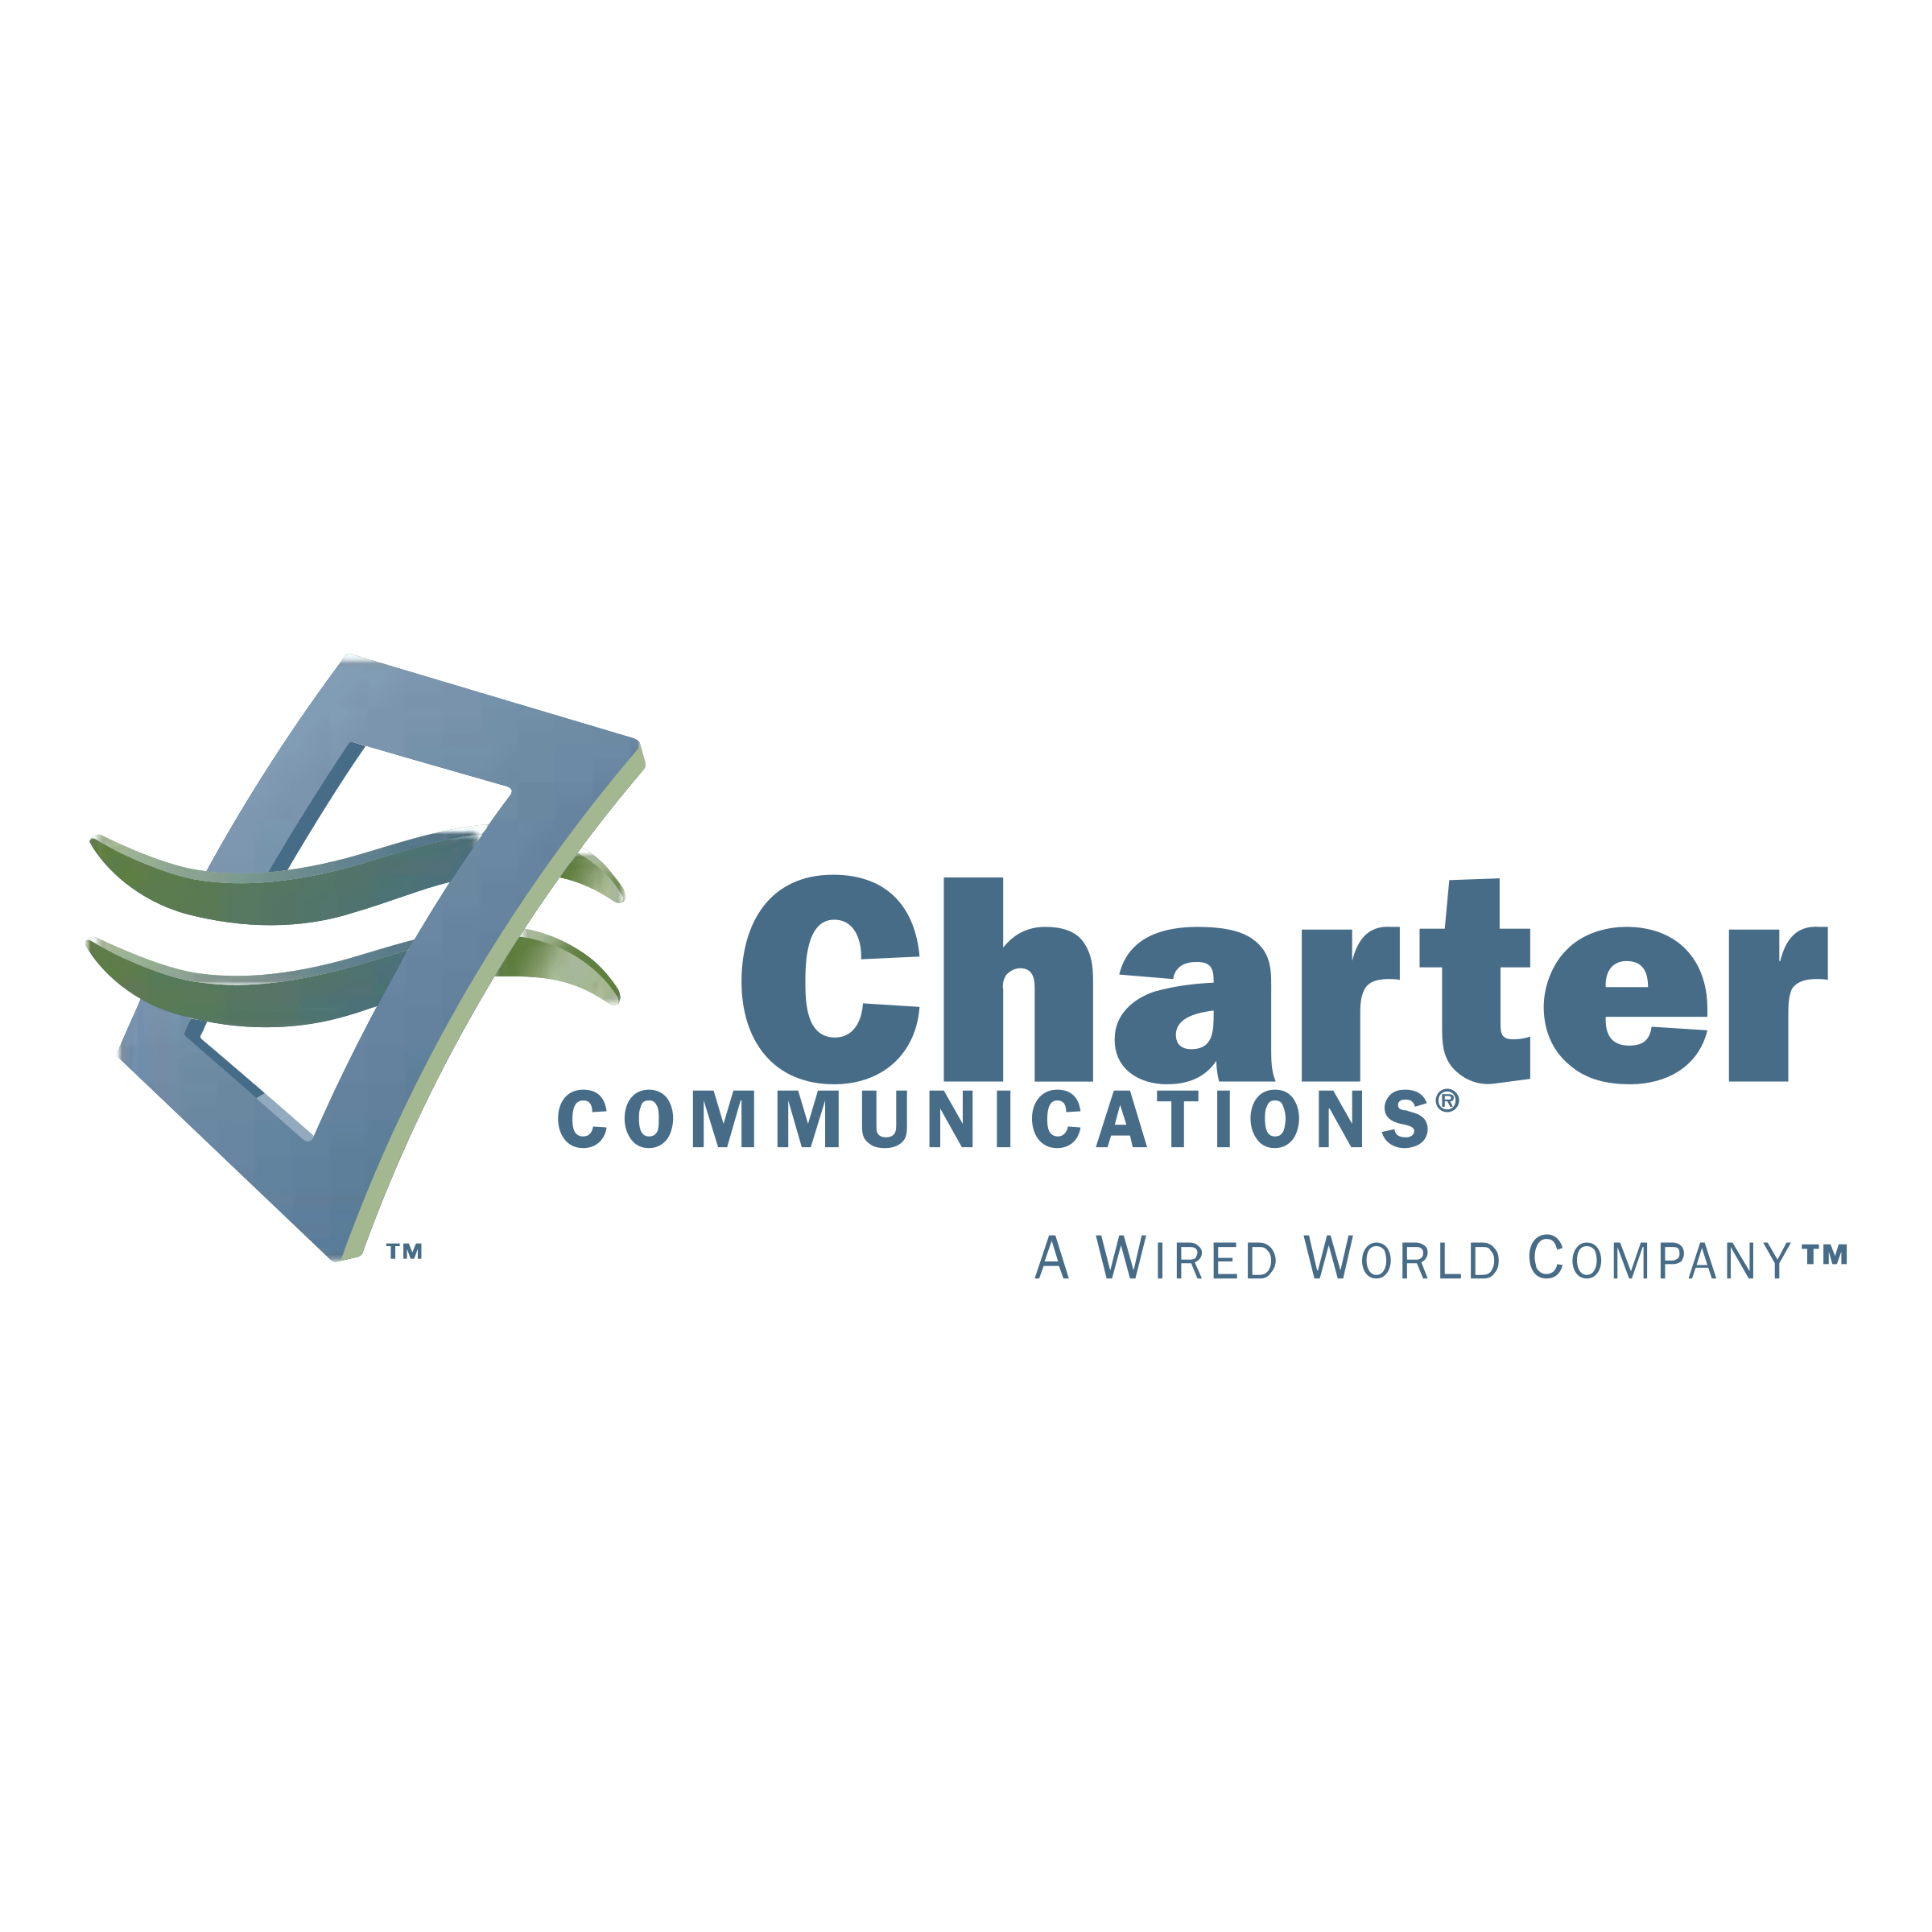 Charter Communications Logo - Charter Communications Logo PNG Transparent & SVG Vector - Freebie ...